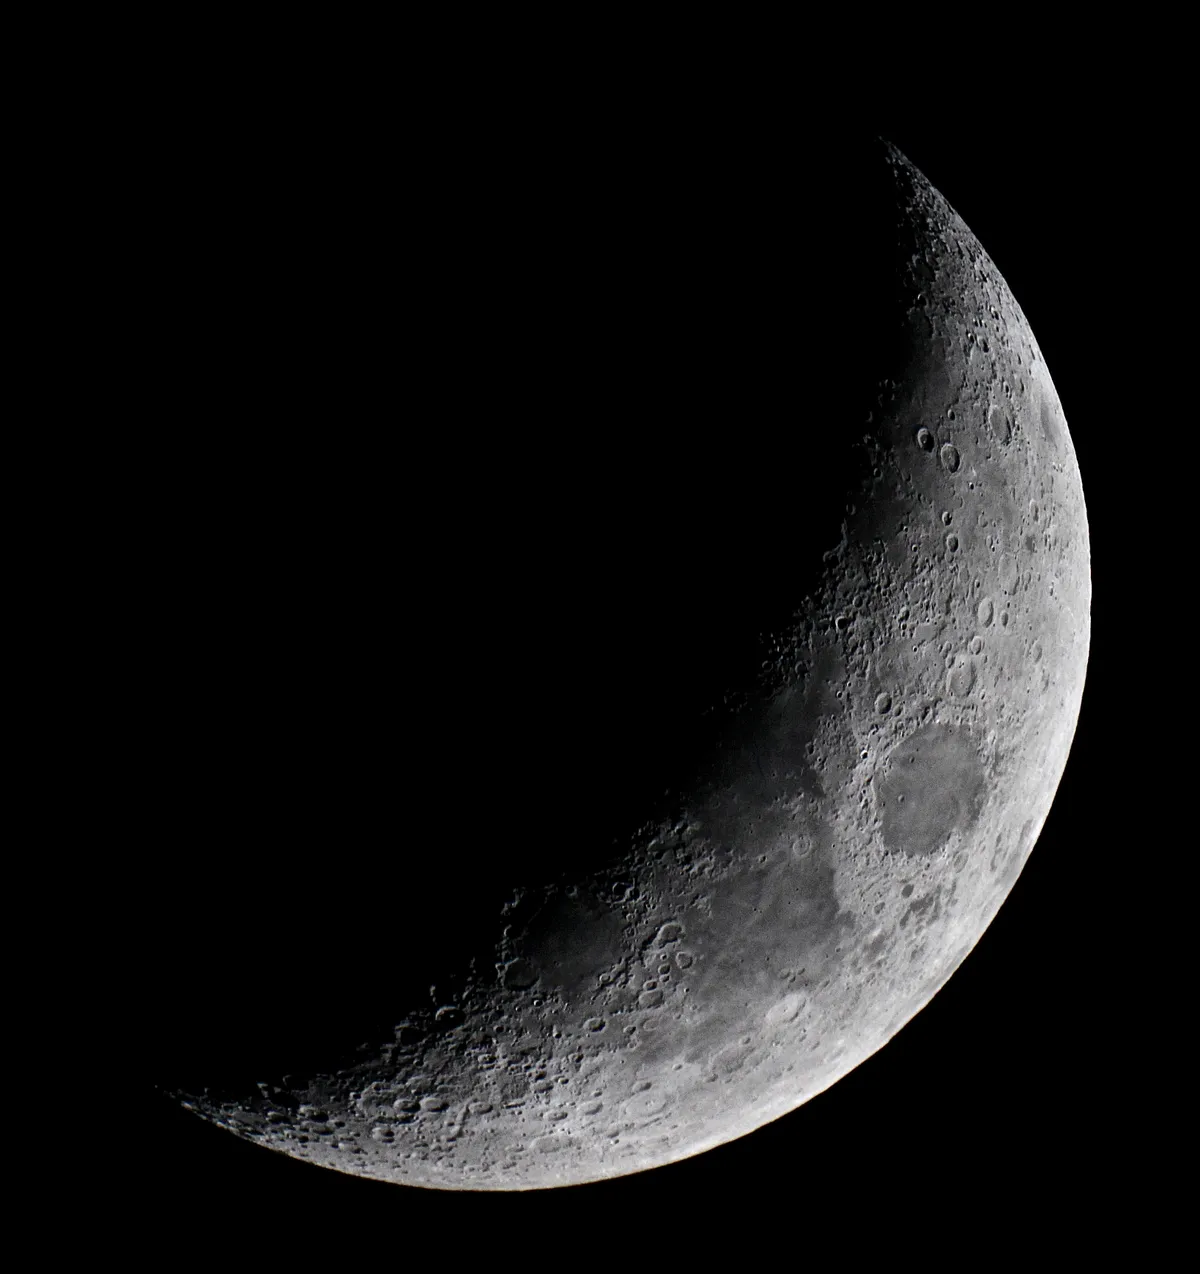 Waxing Crescent Moon by Sarah & Simon Fisher, Bromsgrove, Worcestershire. Equipment: Canon 600D, Maksutov 127mm telescope, Prime focus single shot.